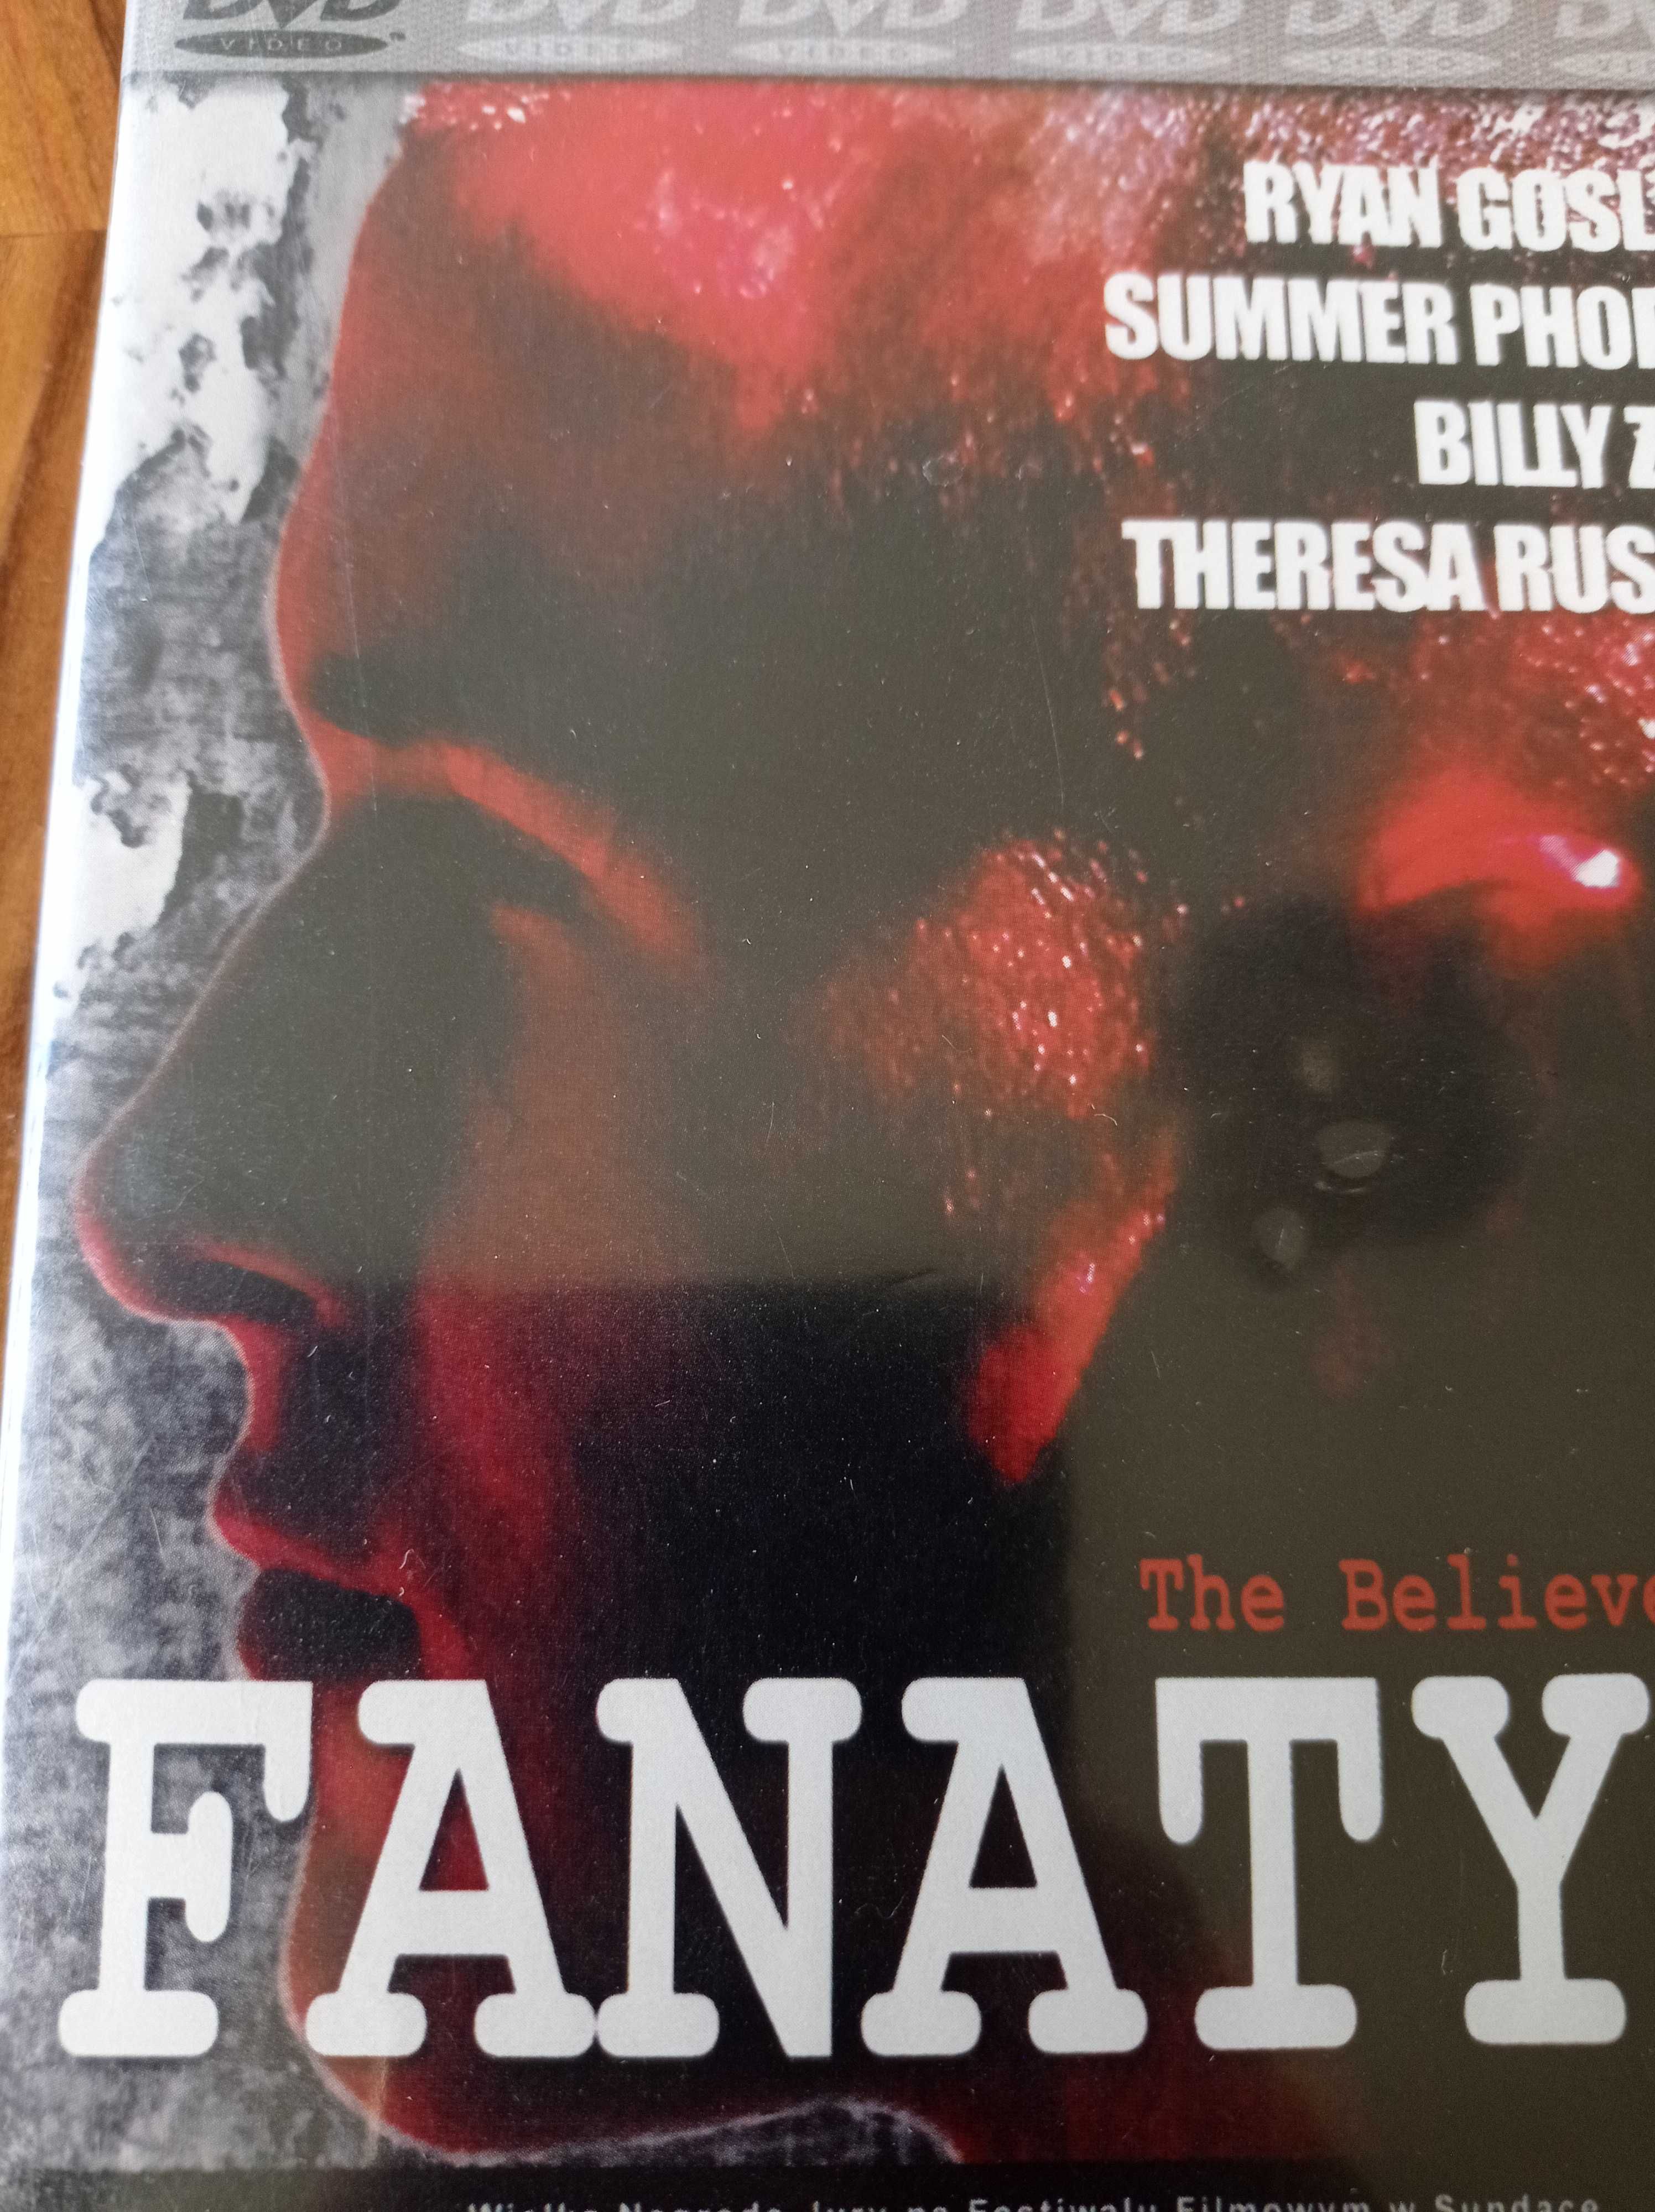 DVD FANATYK z Ryan Gosling The Believer